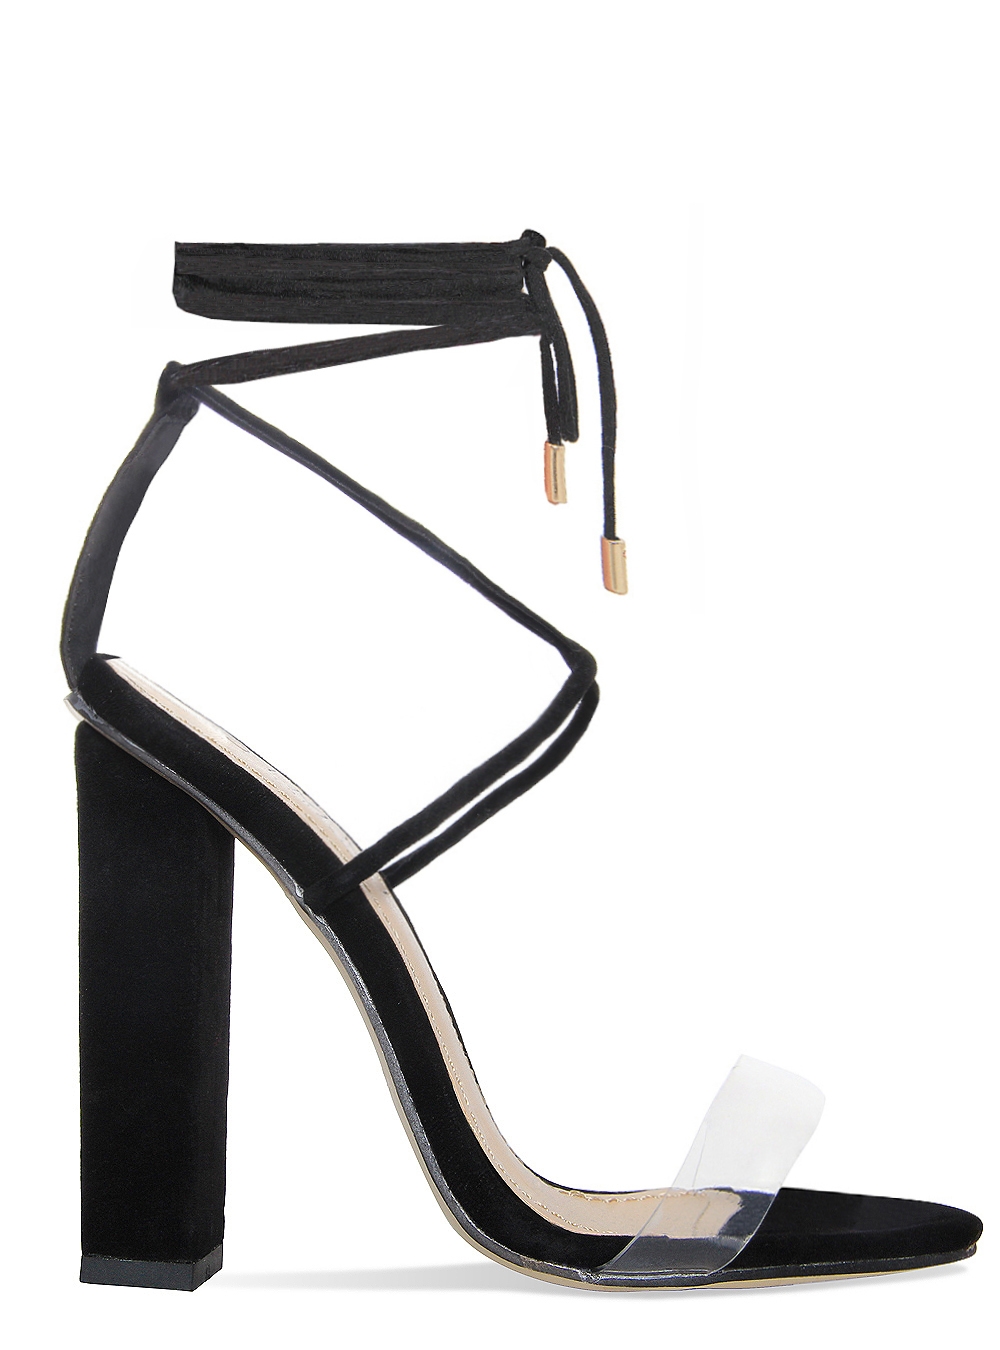 Calvin Klein Black Suede Leather Pumps Block Heel Round Almond toe KASEY  Heels 8 | eBay